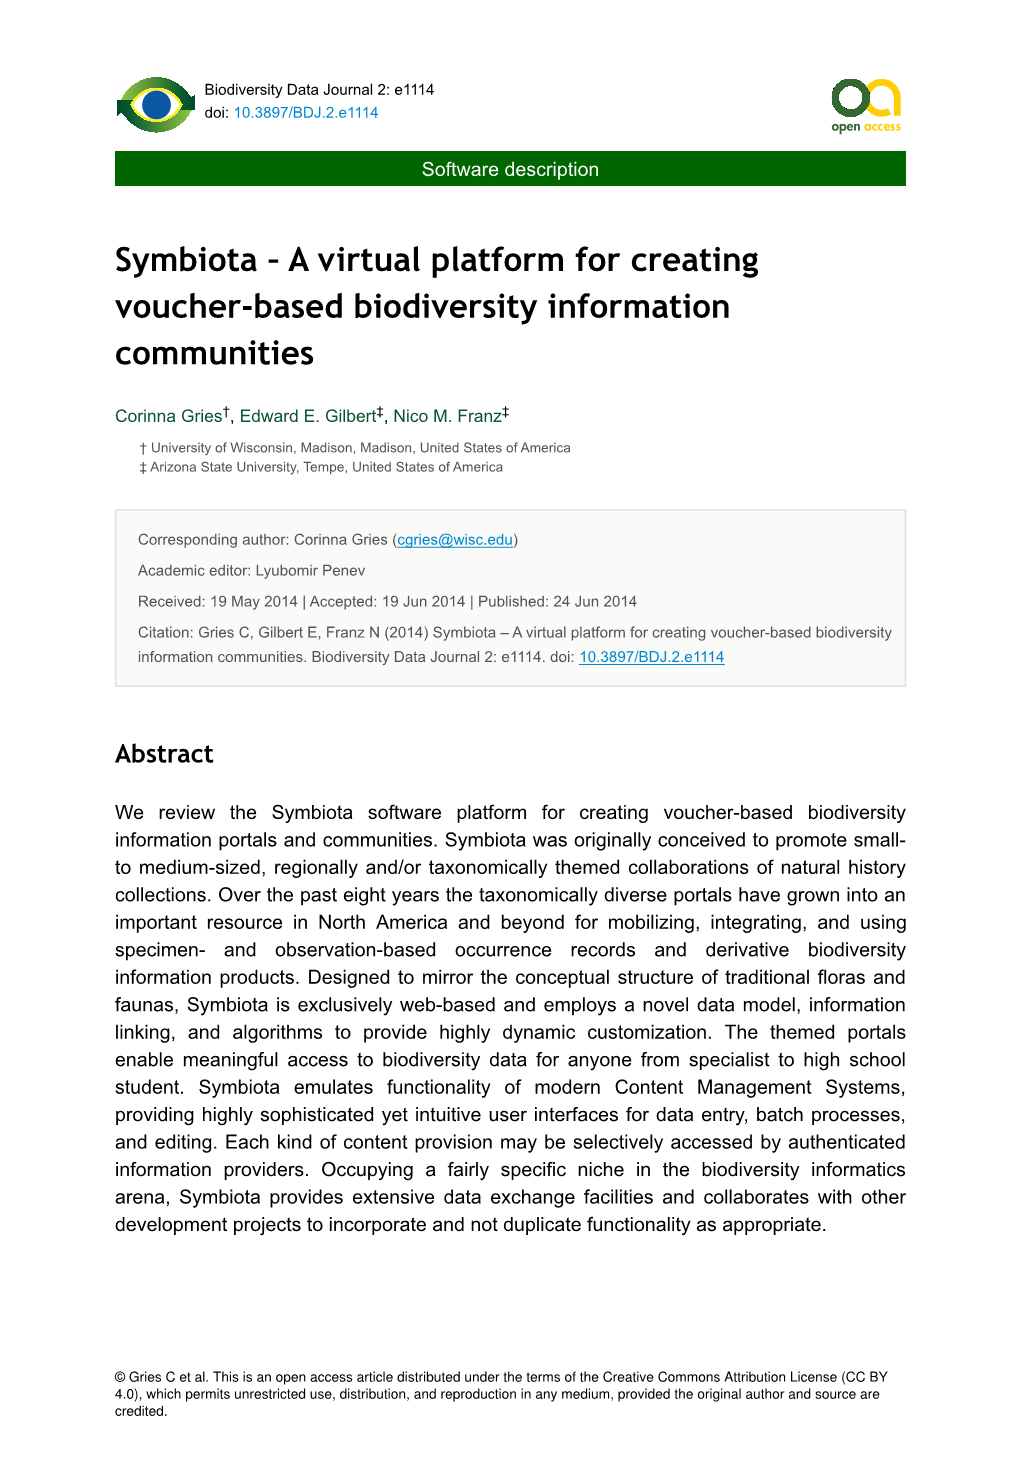 Symbiota – a Virtual Platform for Creating Voucher-Based Biodiversity Information Communities